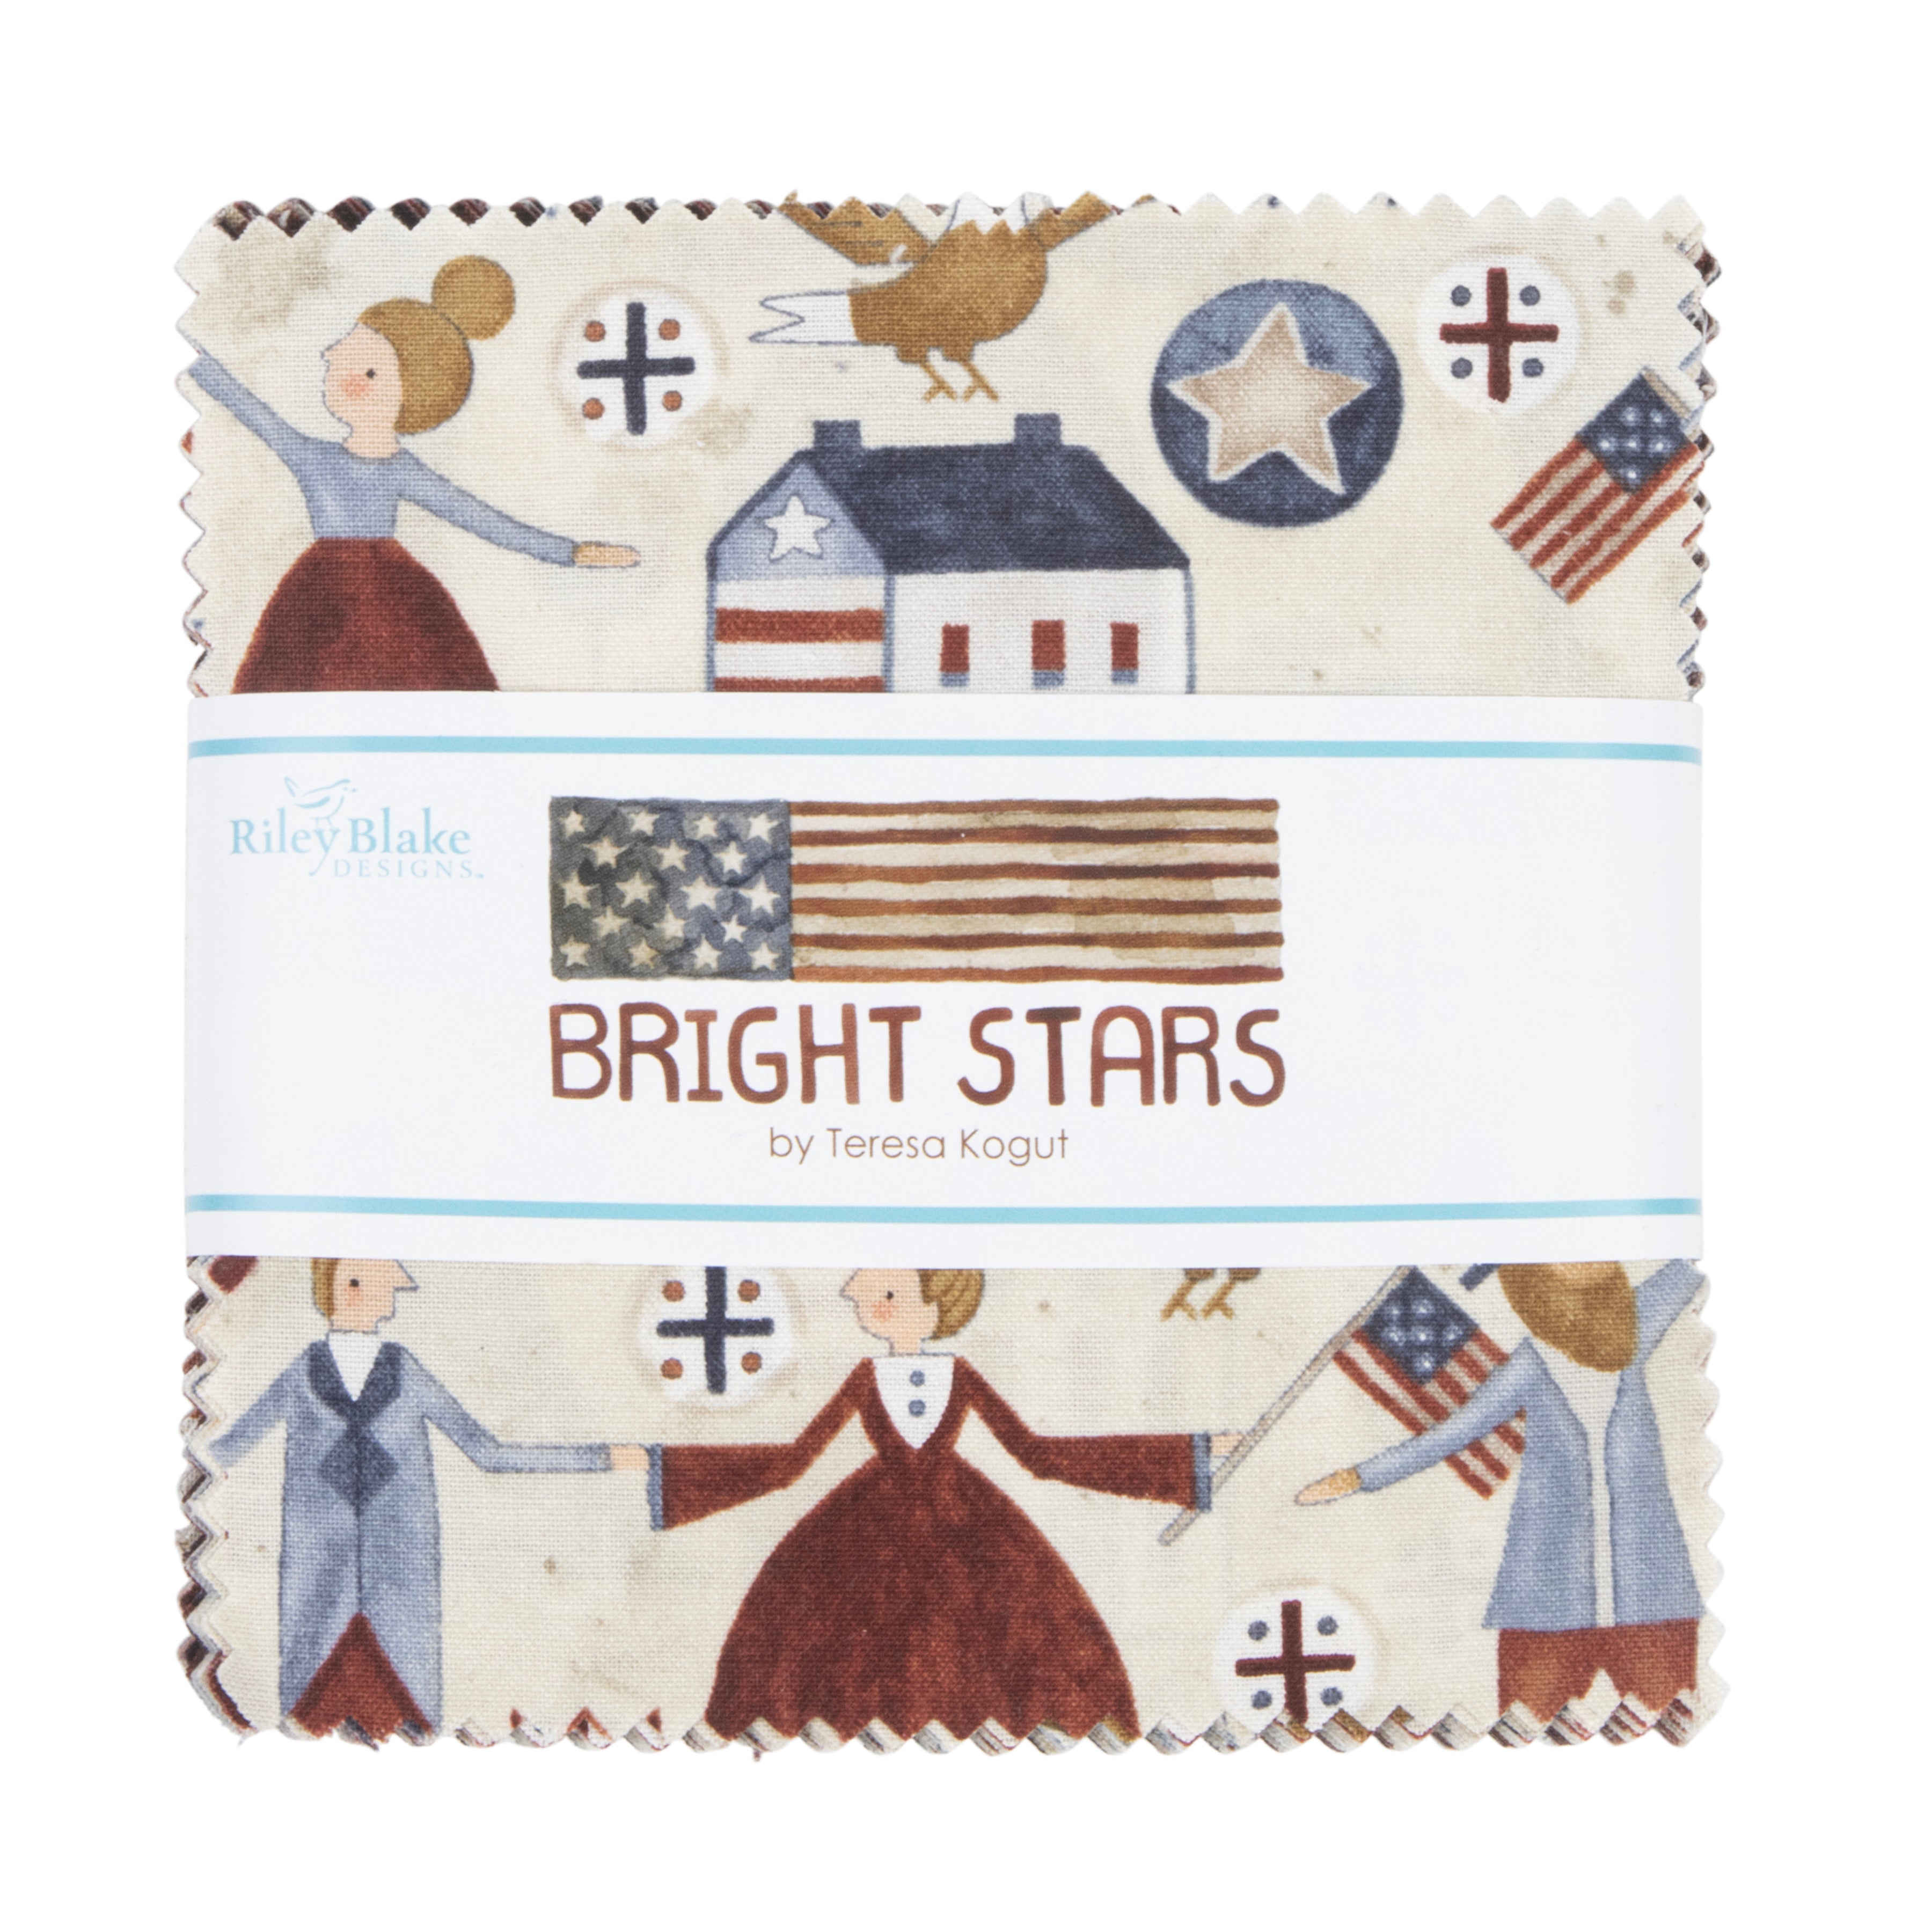 Bright Stars | 5-inch Charm Pack by Teresa Kogut for Riley Blake | 42pcs